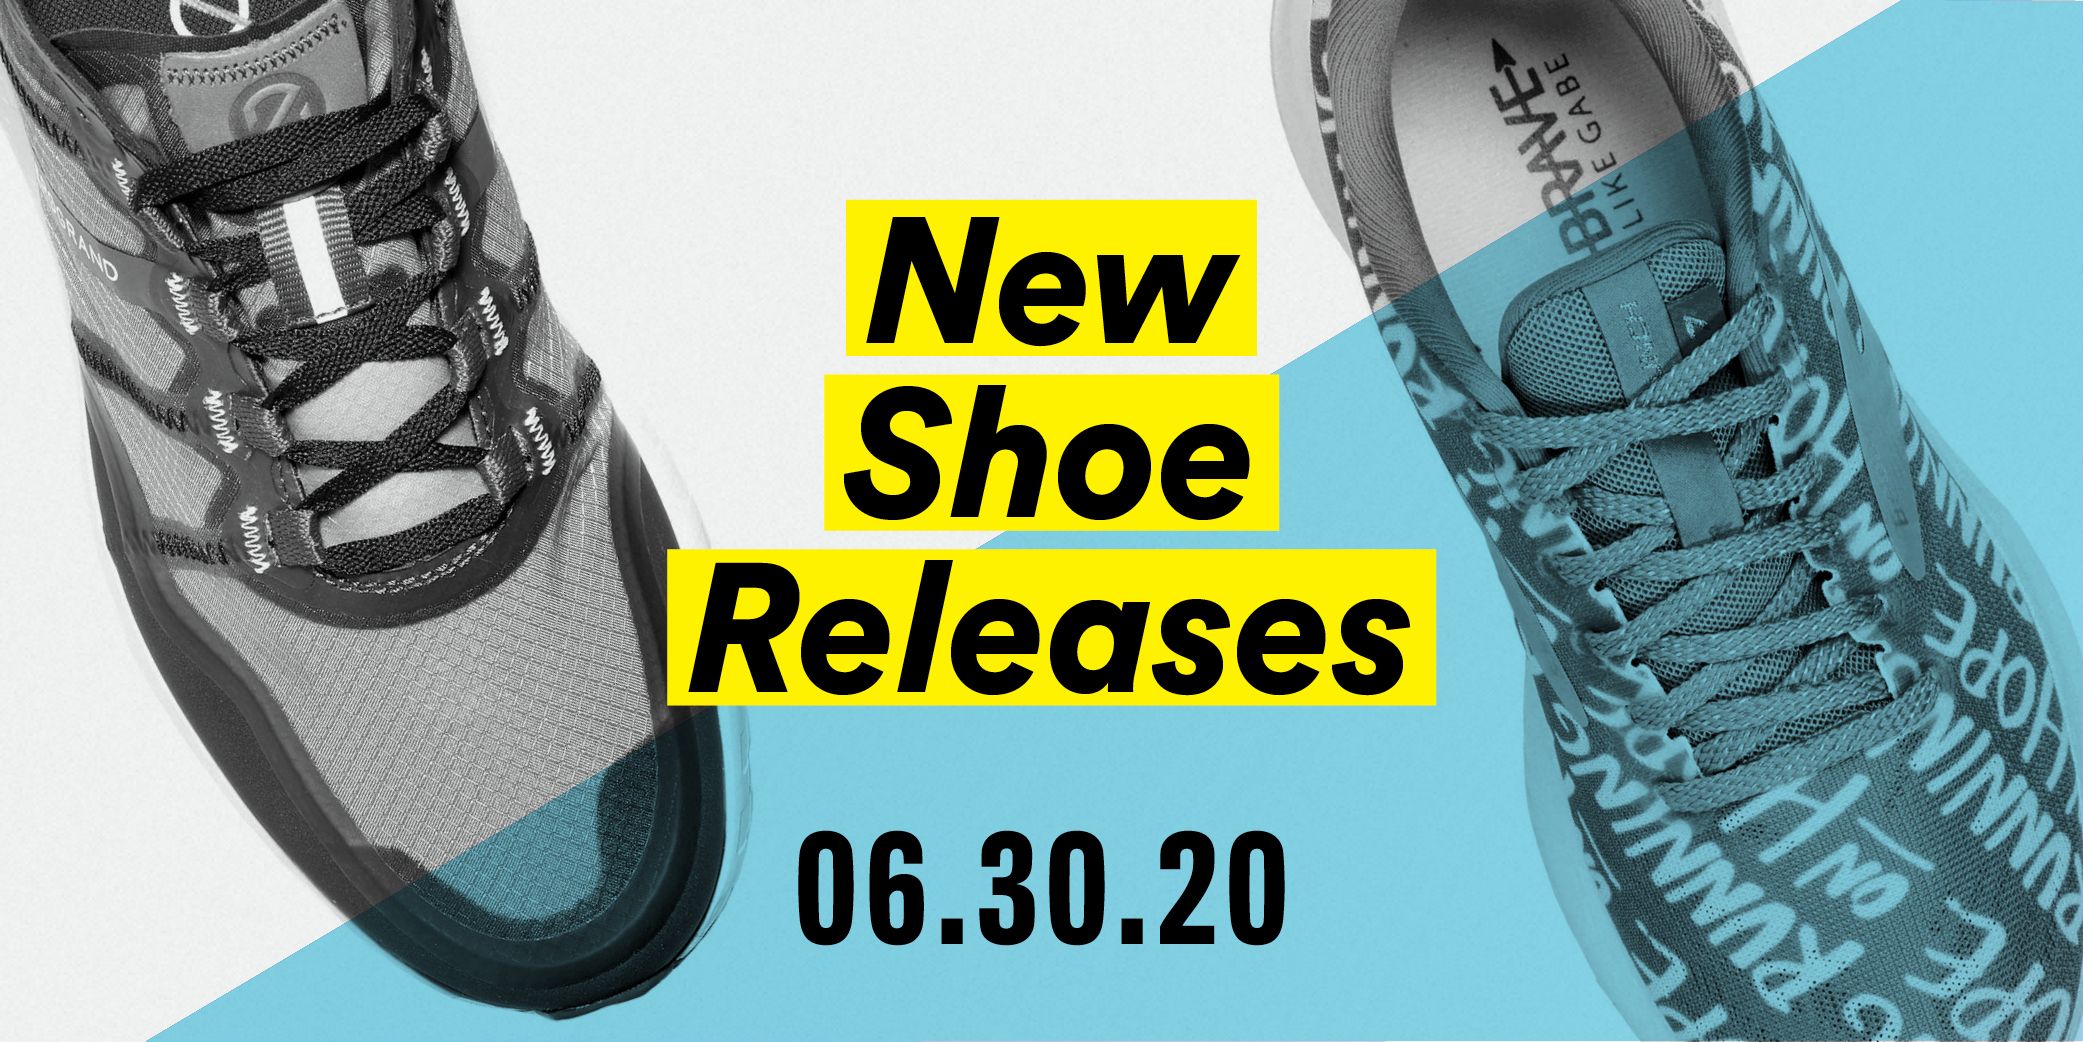 Agrícola Pais de Ciudadania cordura Best New Sneakers June 2020 | Cool Sneakers Releases